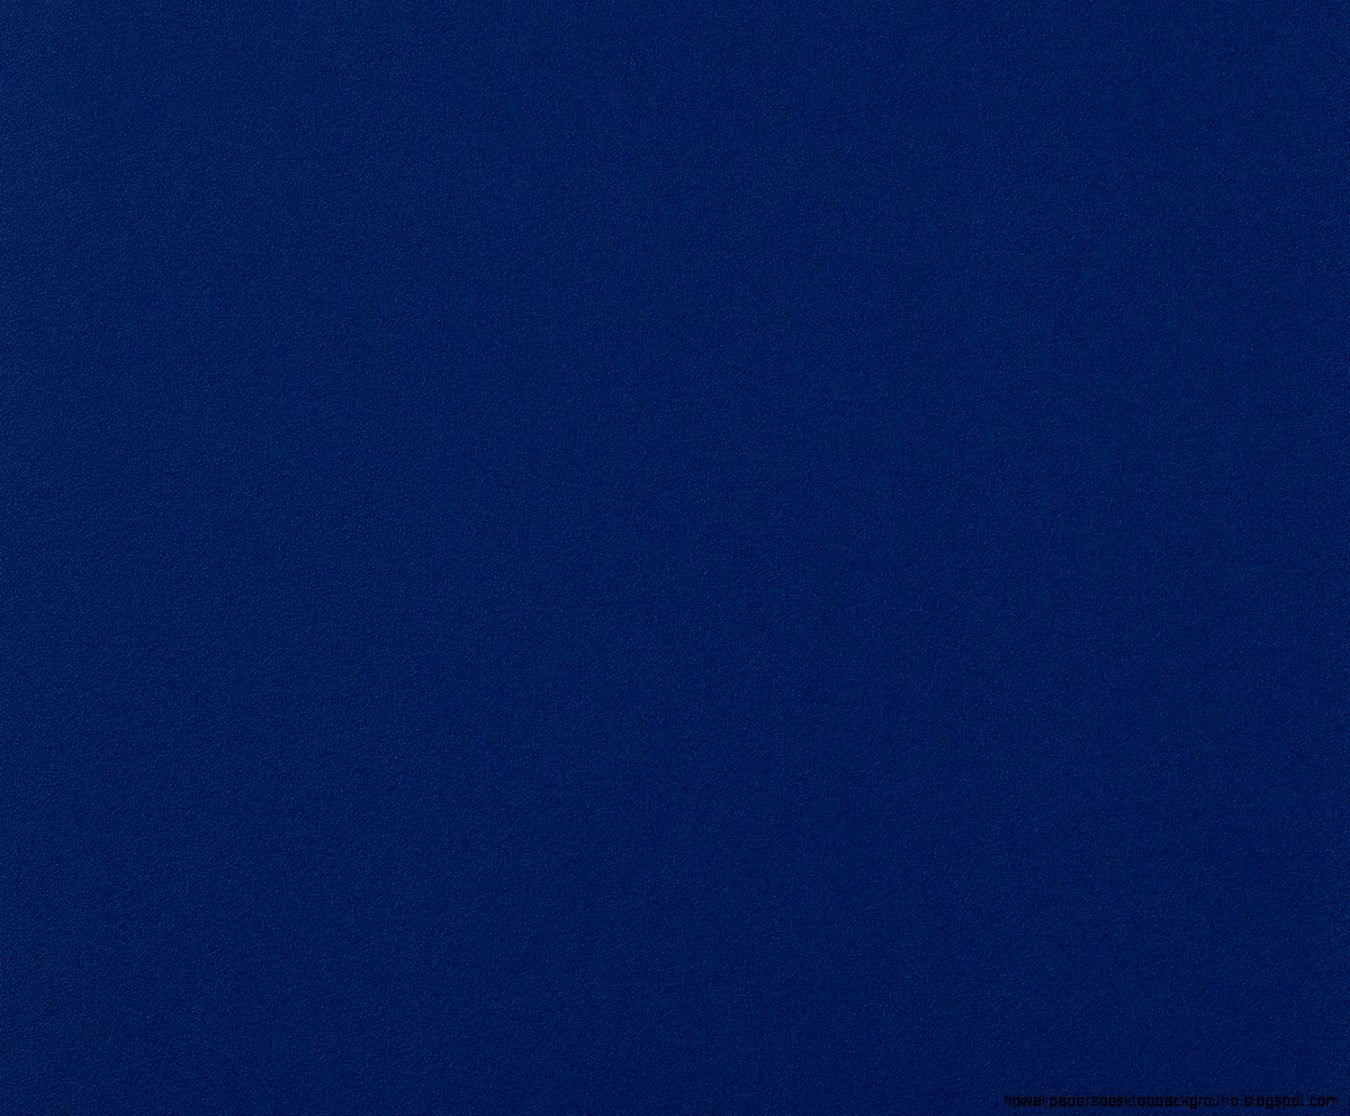 73+] Plain Blue Background Wallpaper - WallpaperSafari